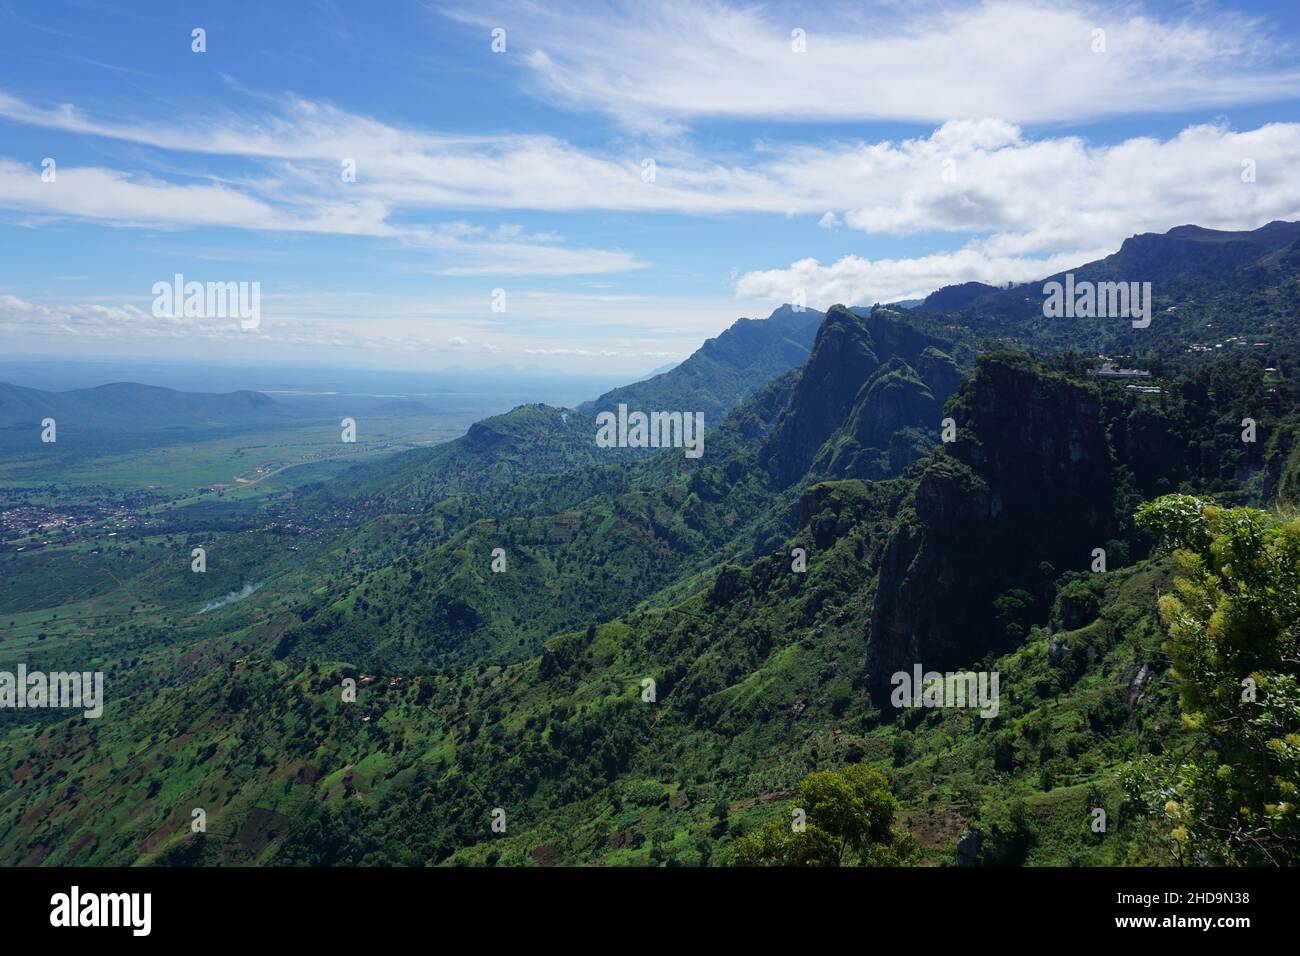 Spectacular view from the Irente view point in the Usambara Mountain Range near Lushoto, Tanzania 2021 Stock Photo